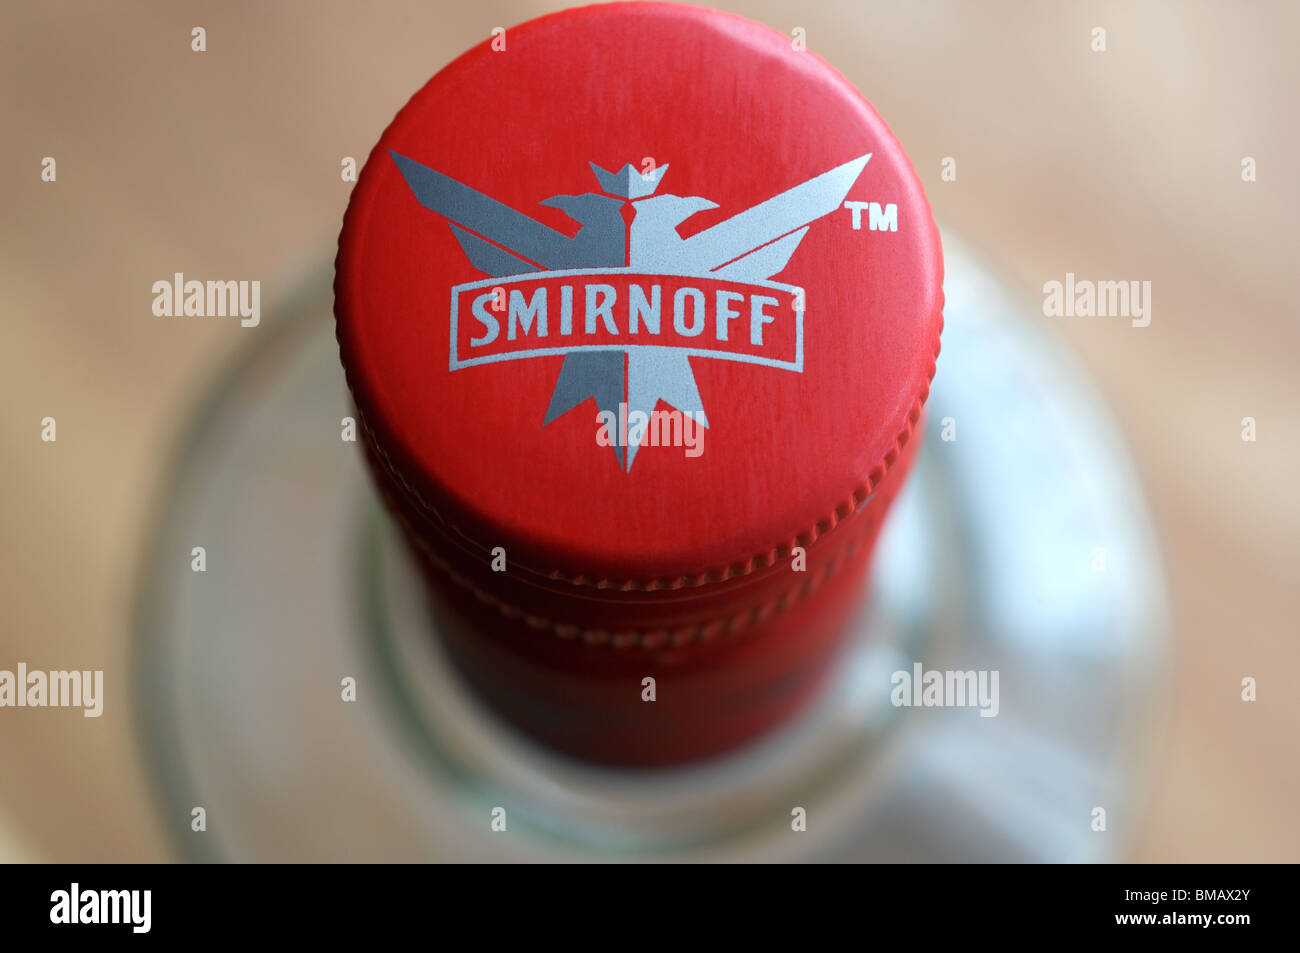 Bottiglia di Smirnoff vodka Foto Stock